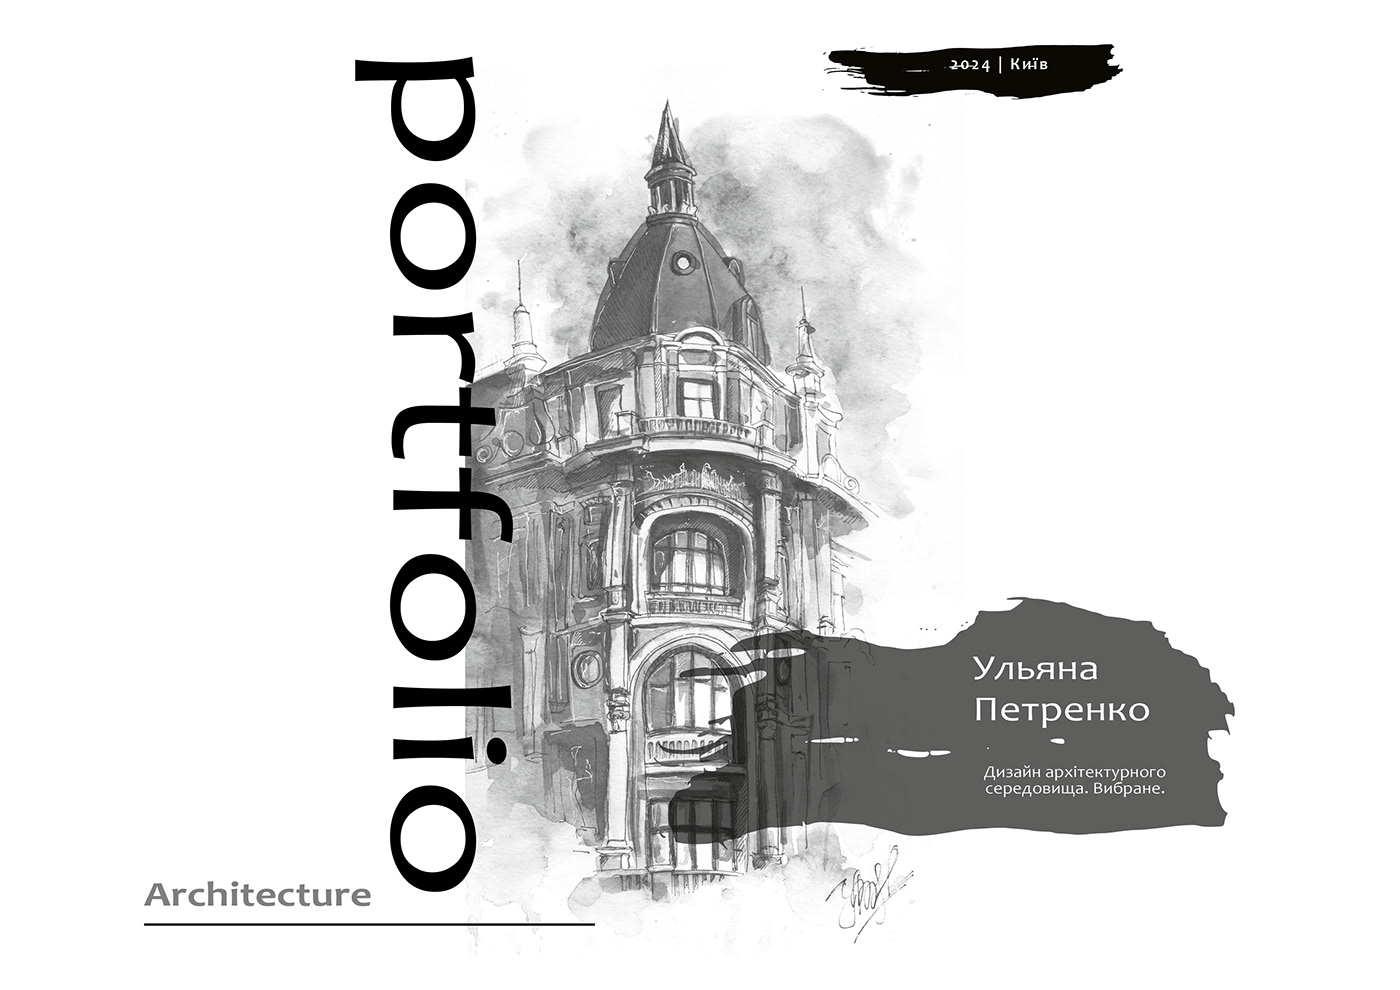 portfolio Arcchitecture портфолио архитектора Architectural Portfolio Архитектурное портфолио